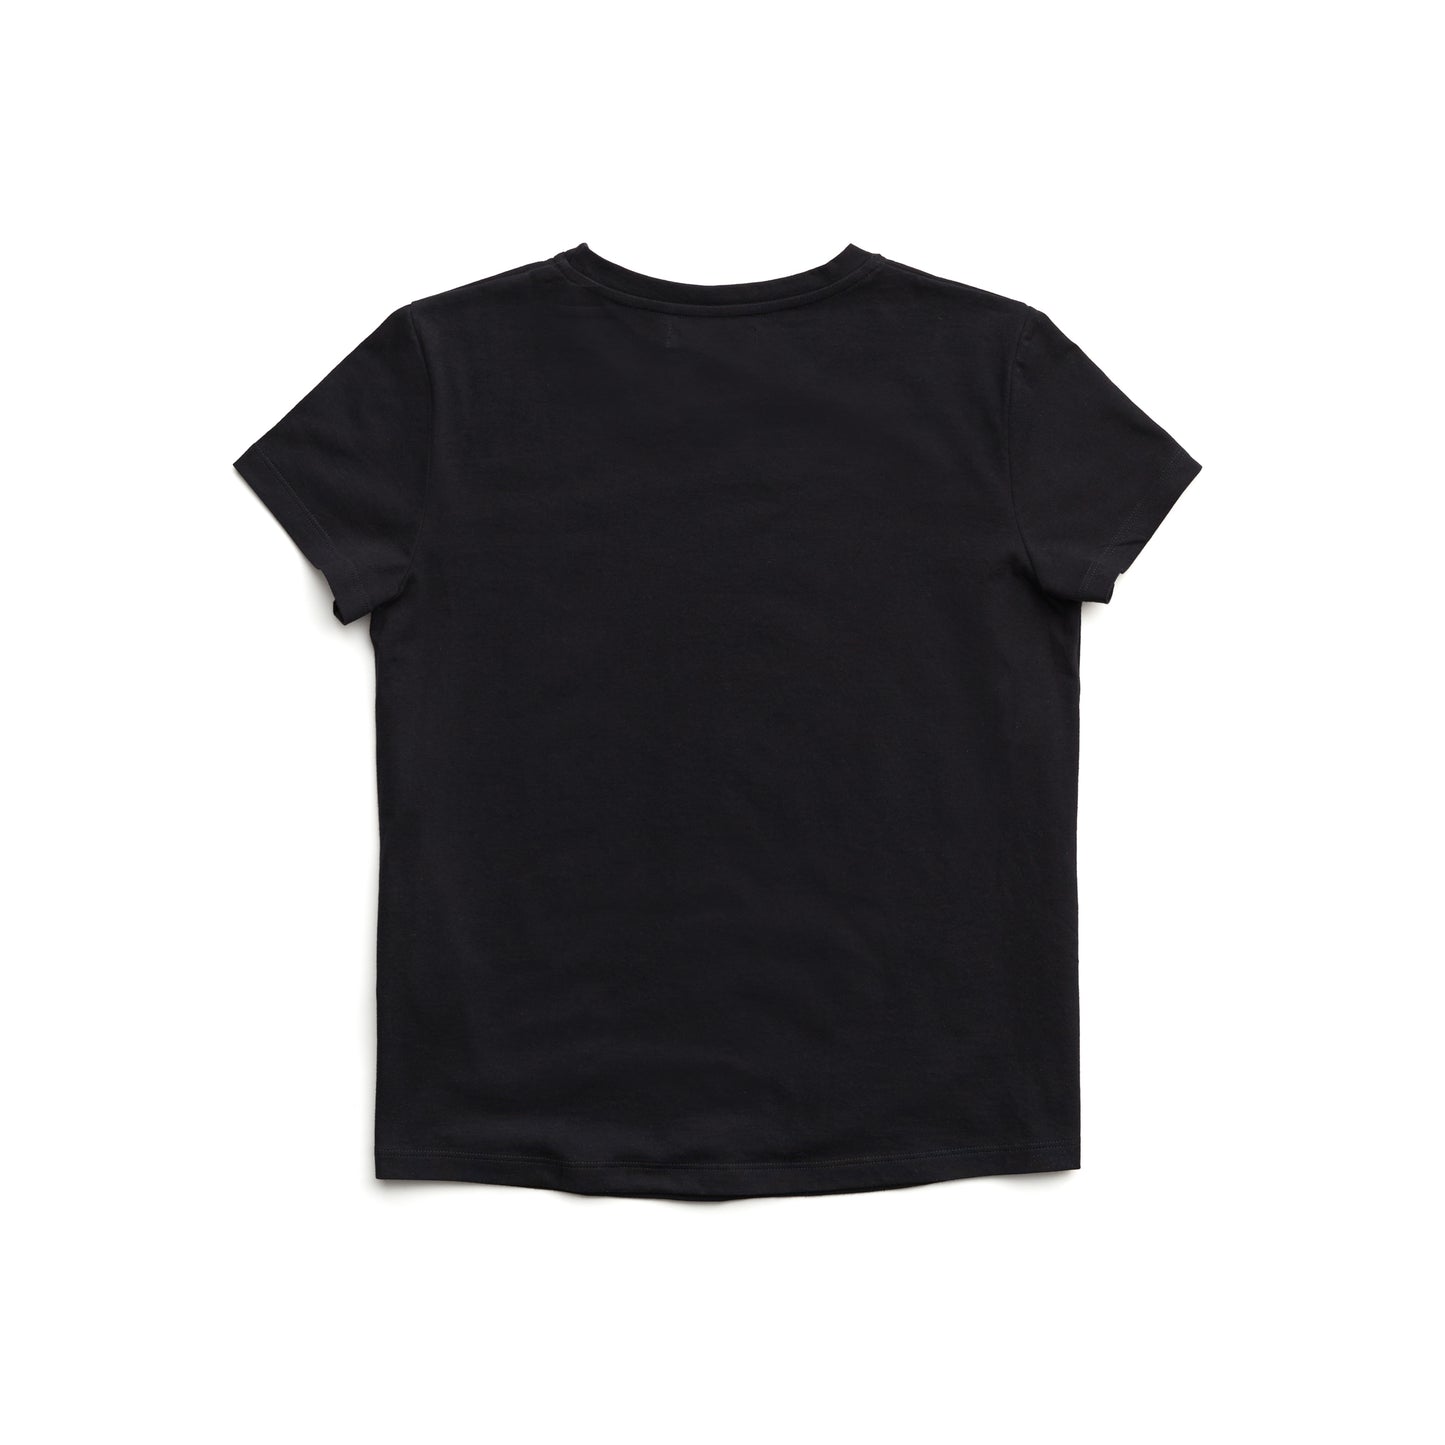 Katlin T-shirt in Black